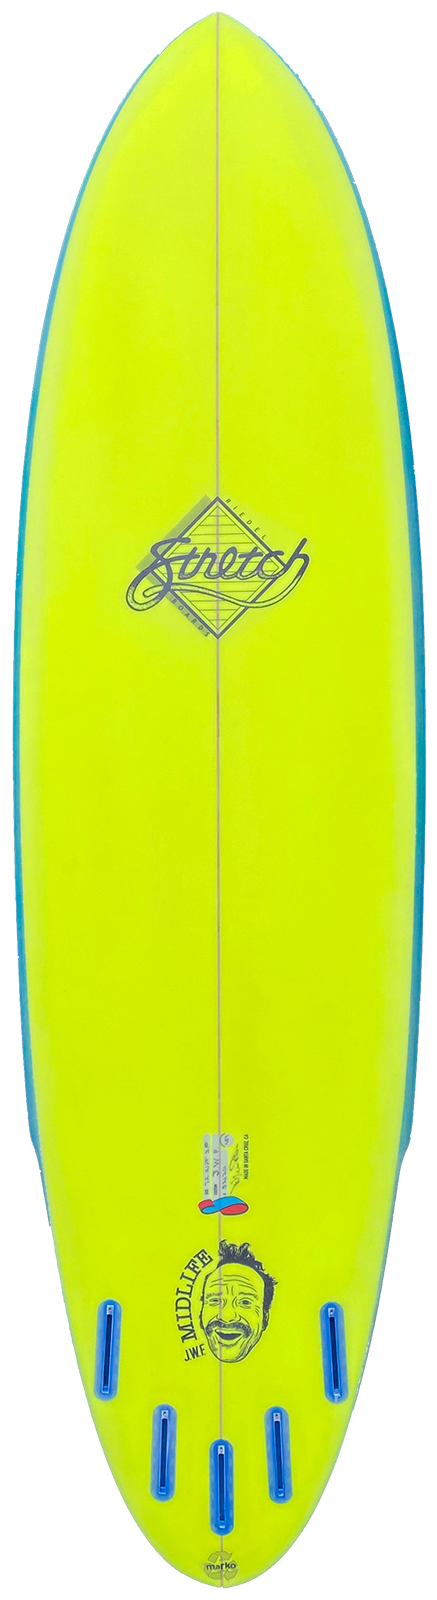 Midlife surfboard